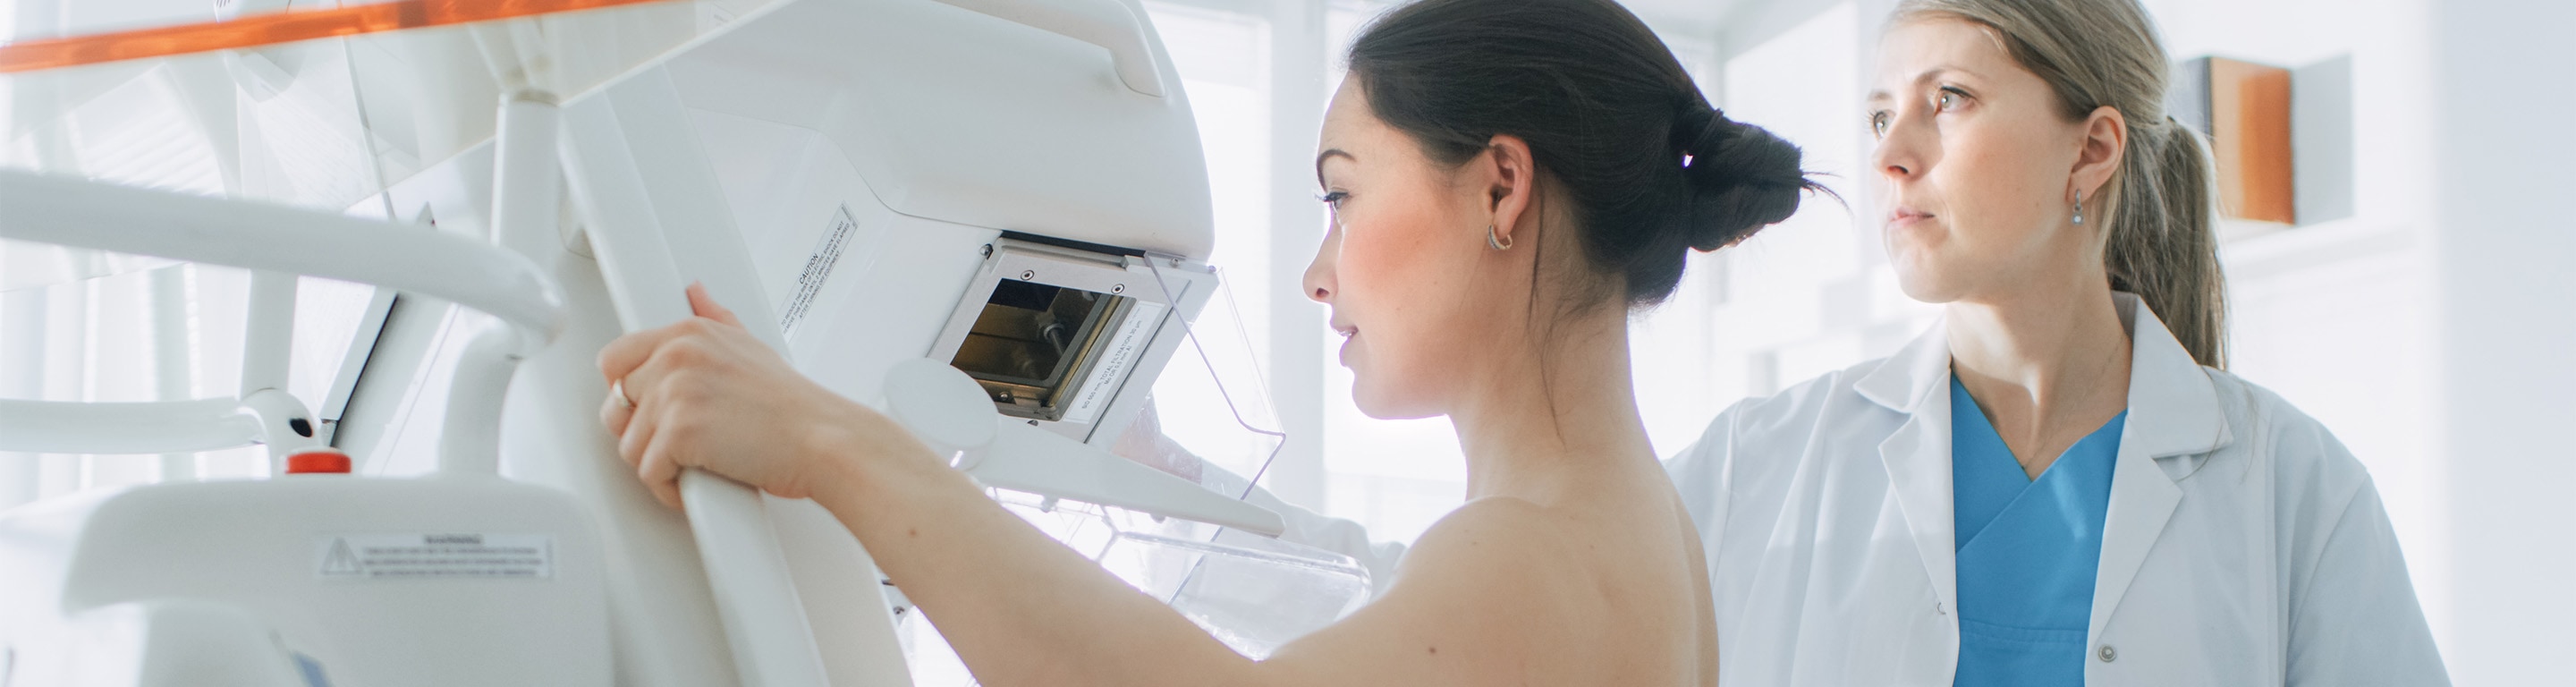 woman getting mammogram - breast health services Axia Women's Health